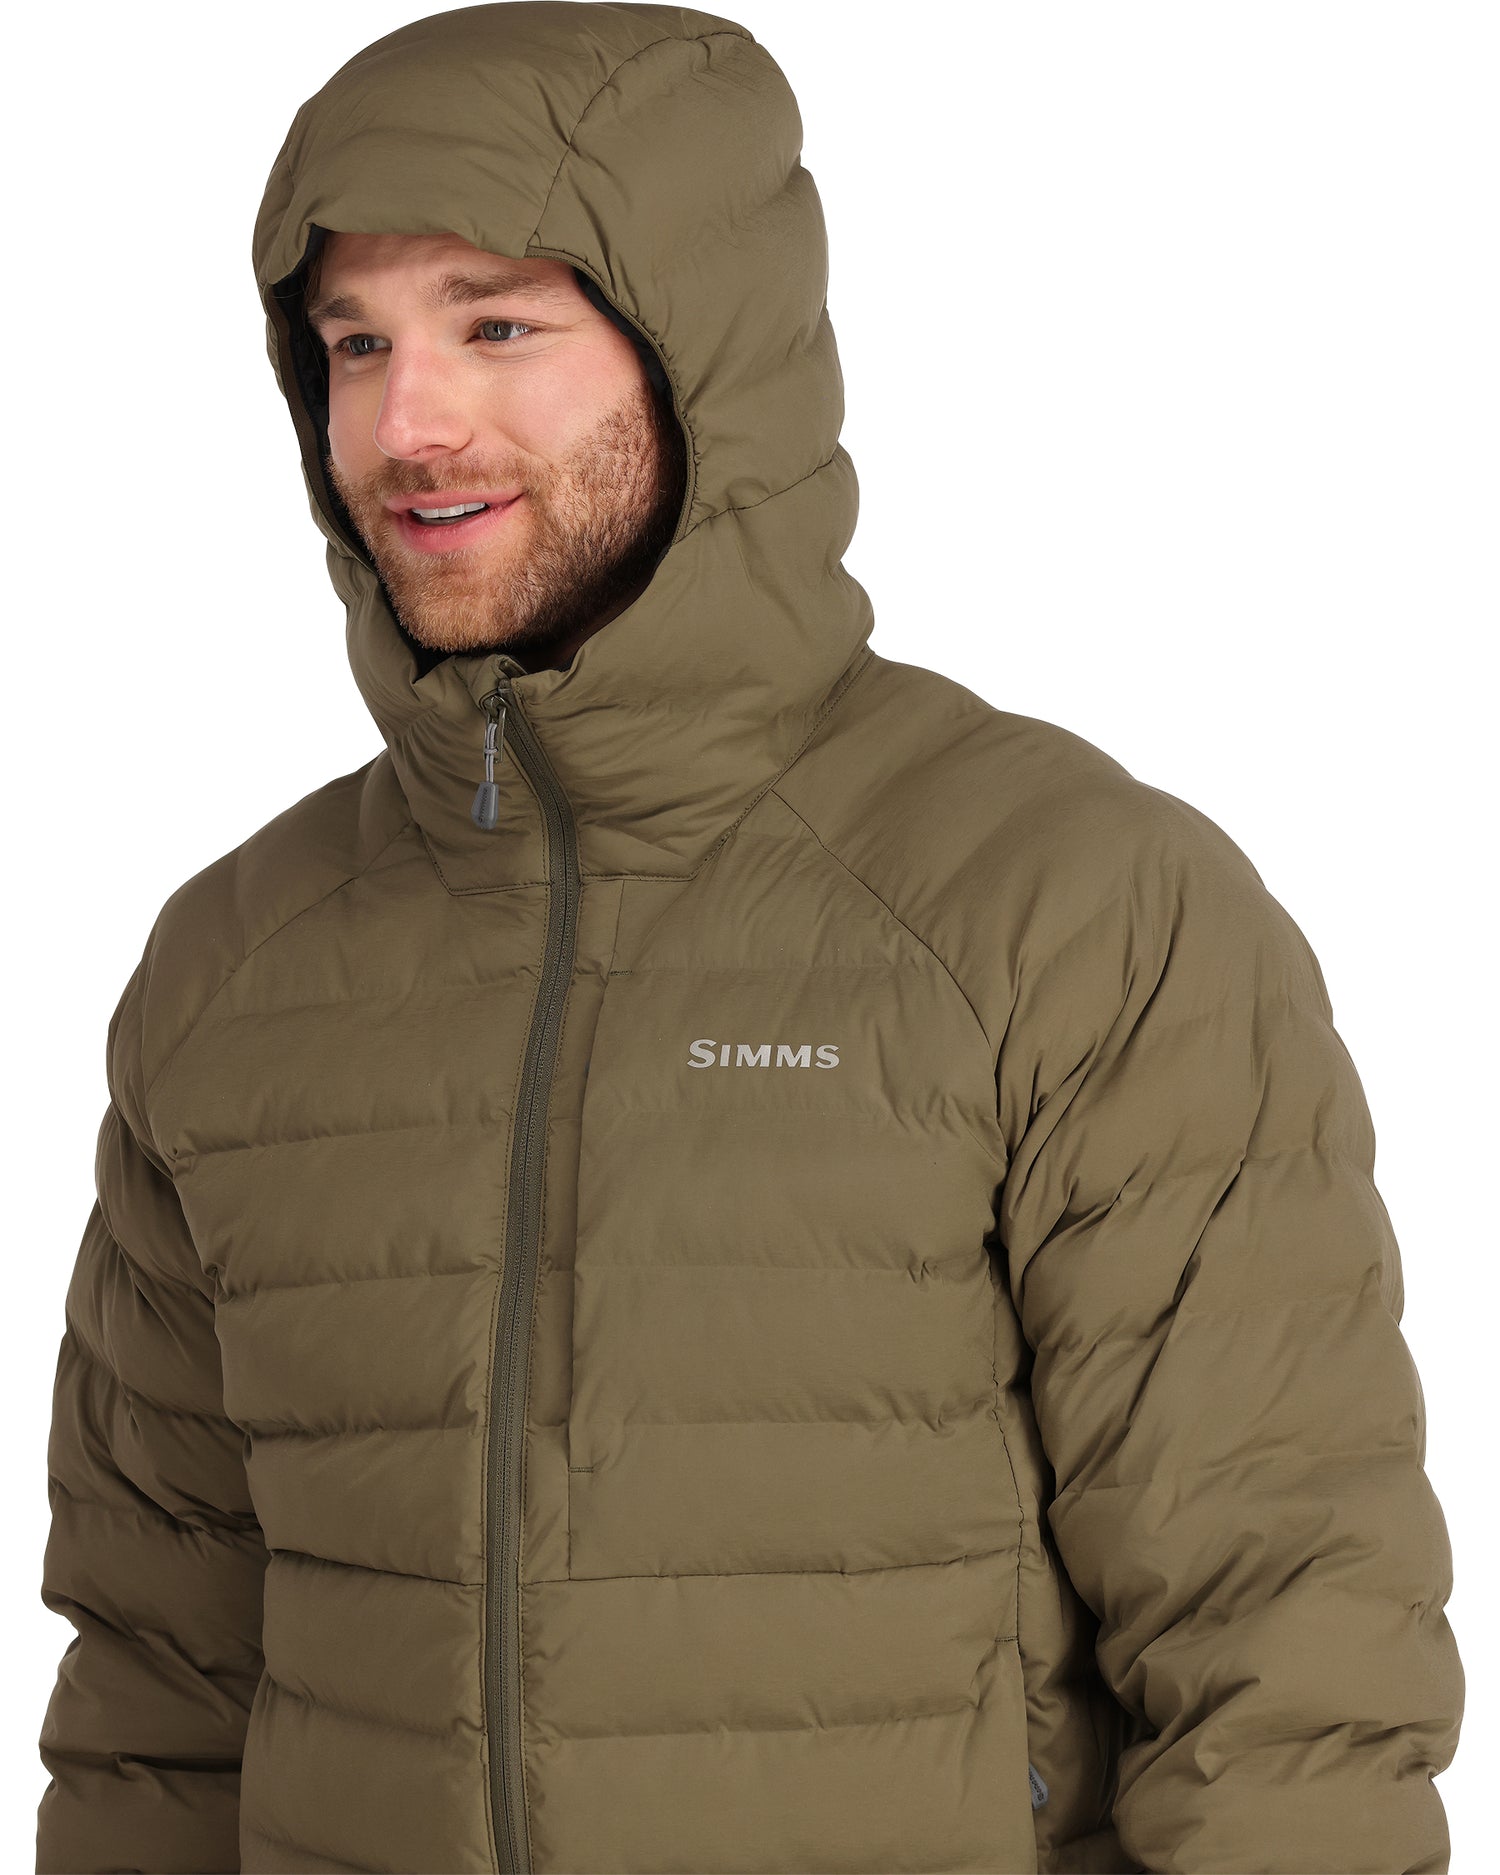 Exstream Hooded Jacket- On Body- front-hood